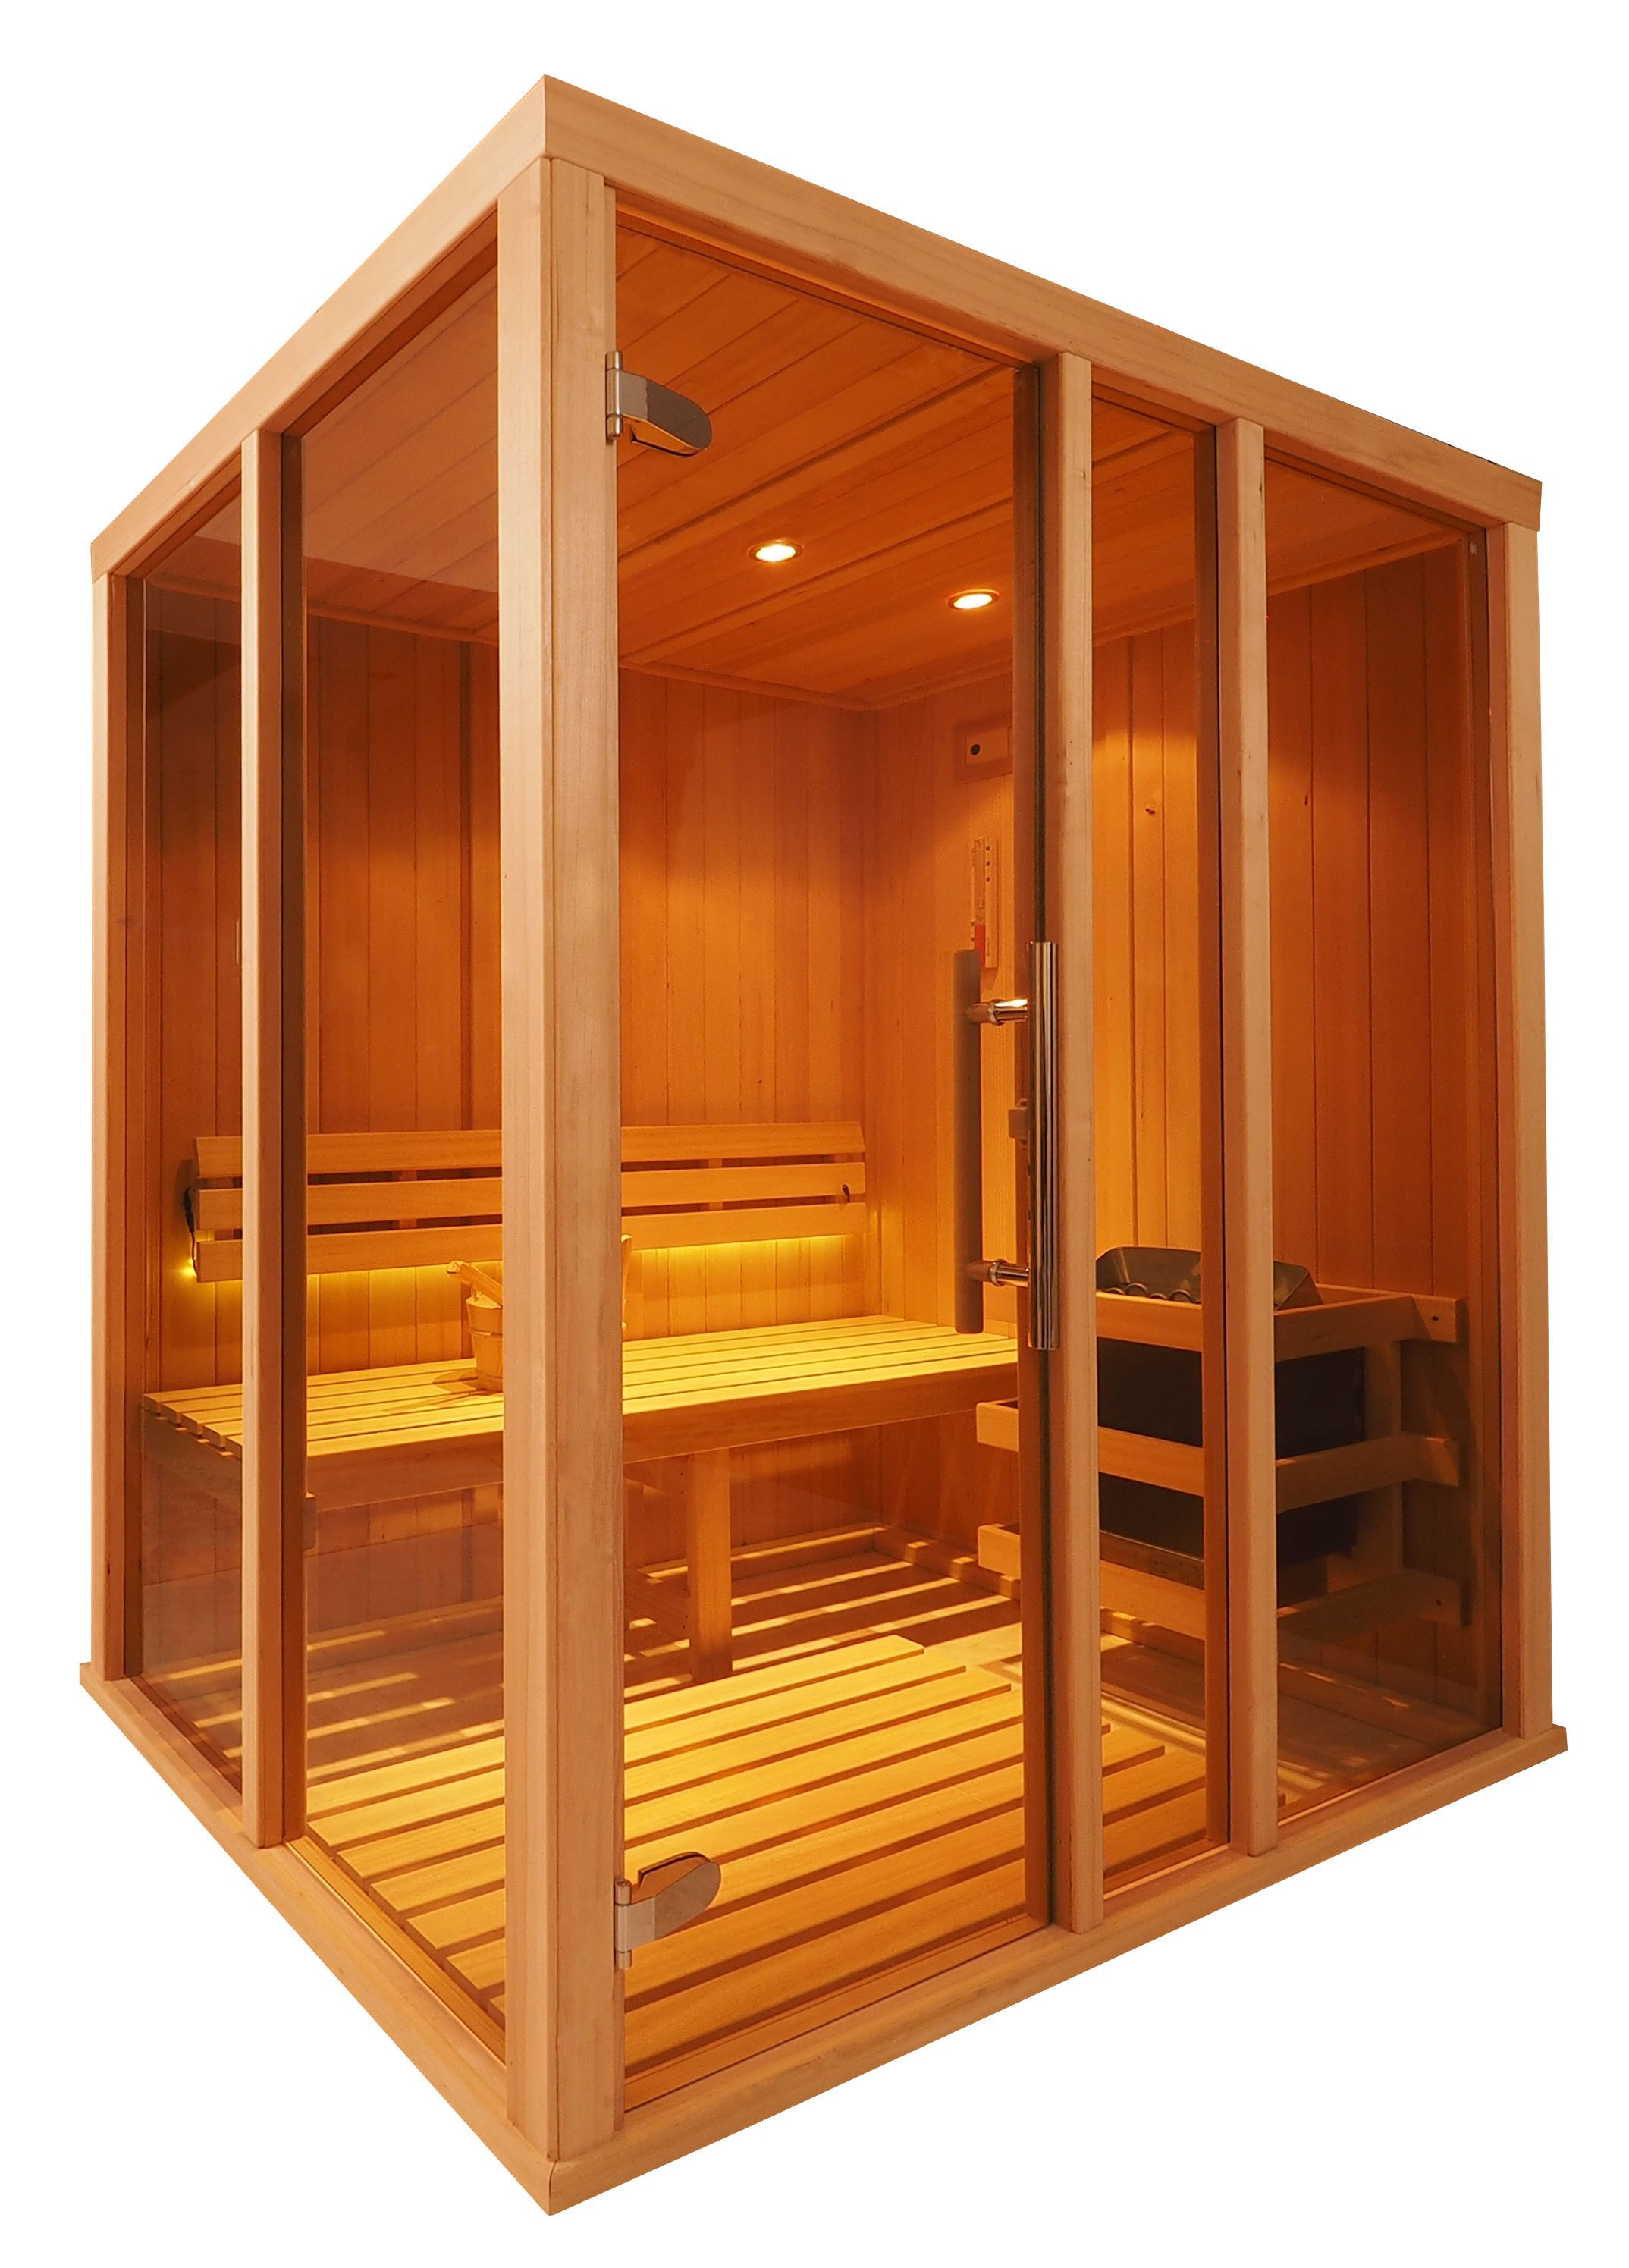 https://www.oceanic-saunas.eu/media/catalog/product/cache/5/image/9df78eab33525d08d6e5fb8d27136e95/v/2/v2025_oceanic_vision_sauna_cabin_exterior_with_wall_hung_heater.jpg